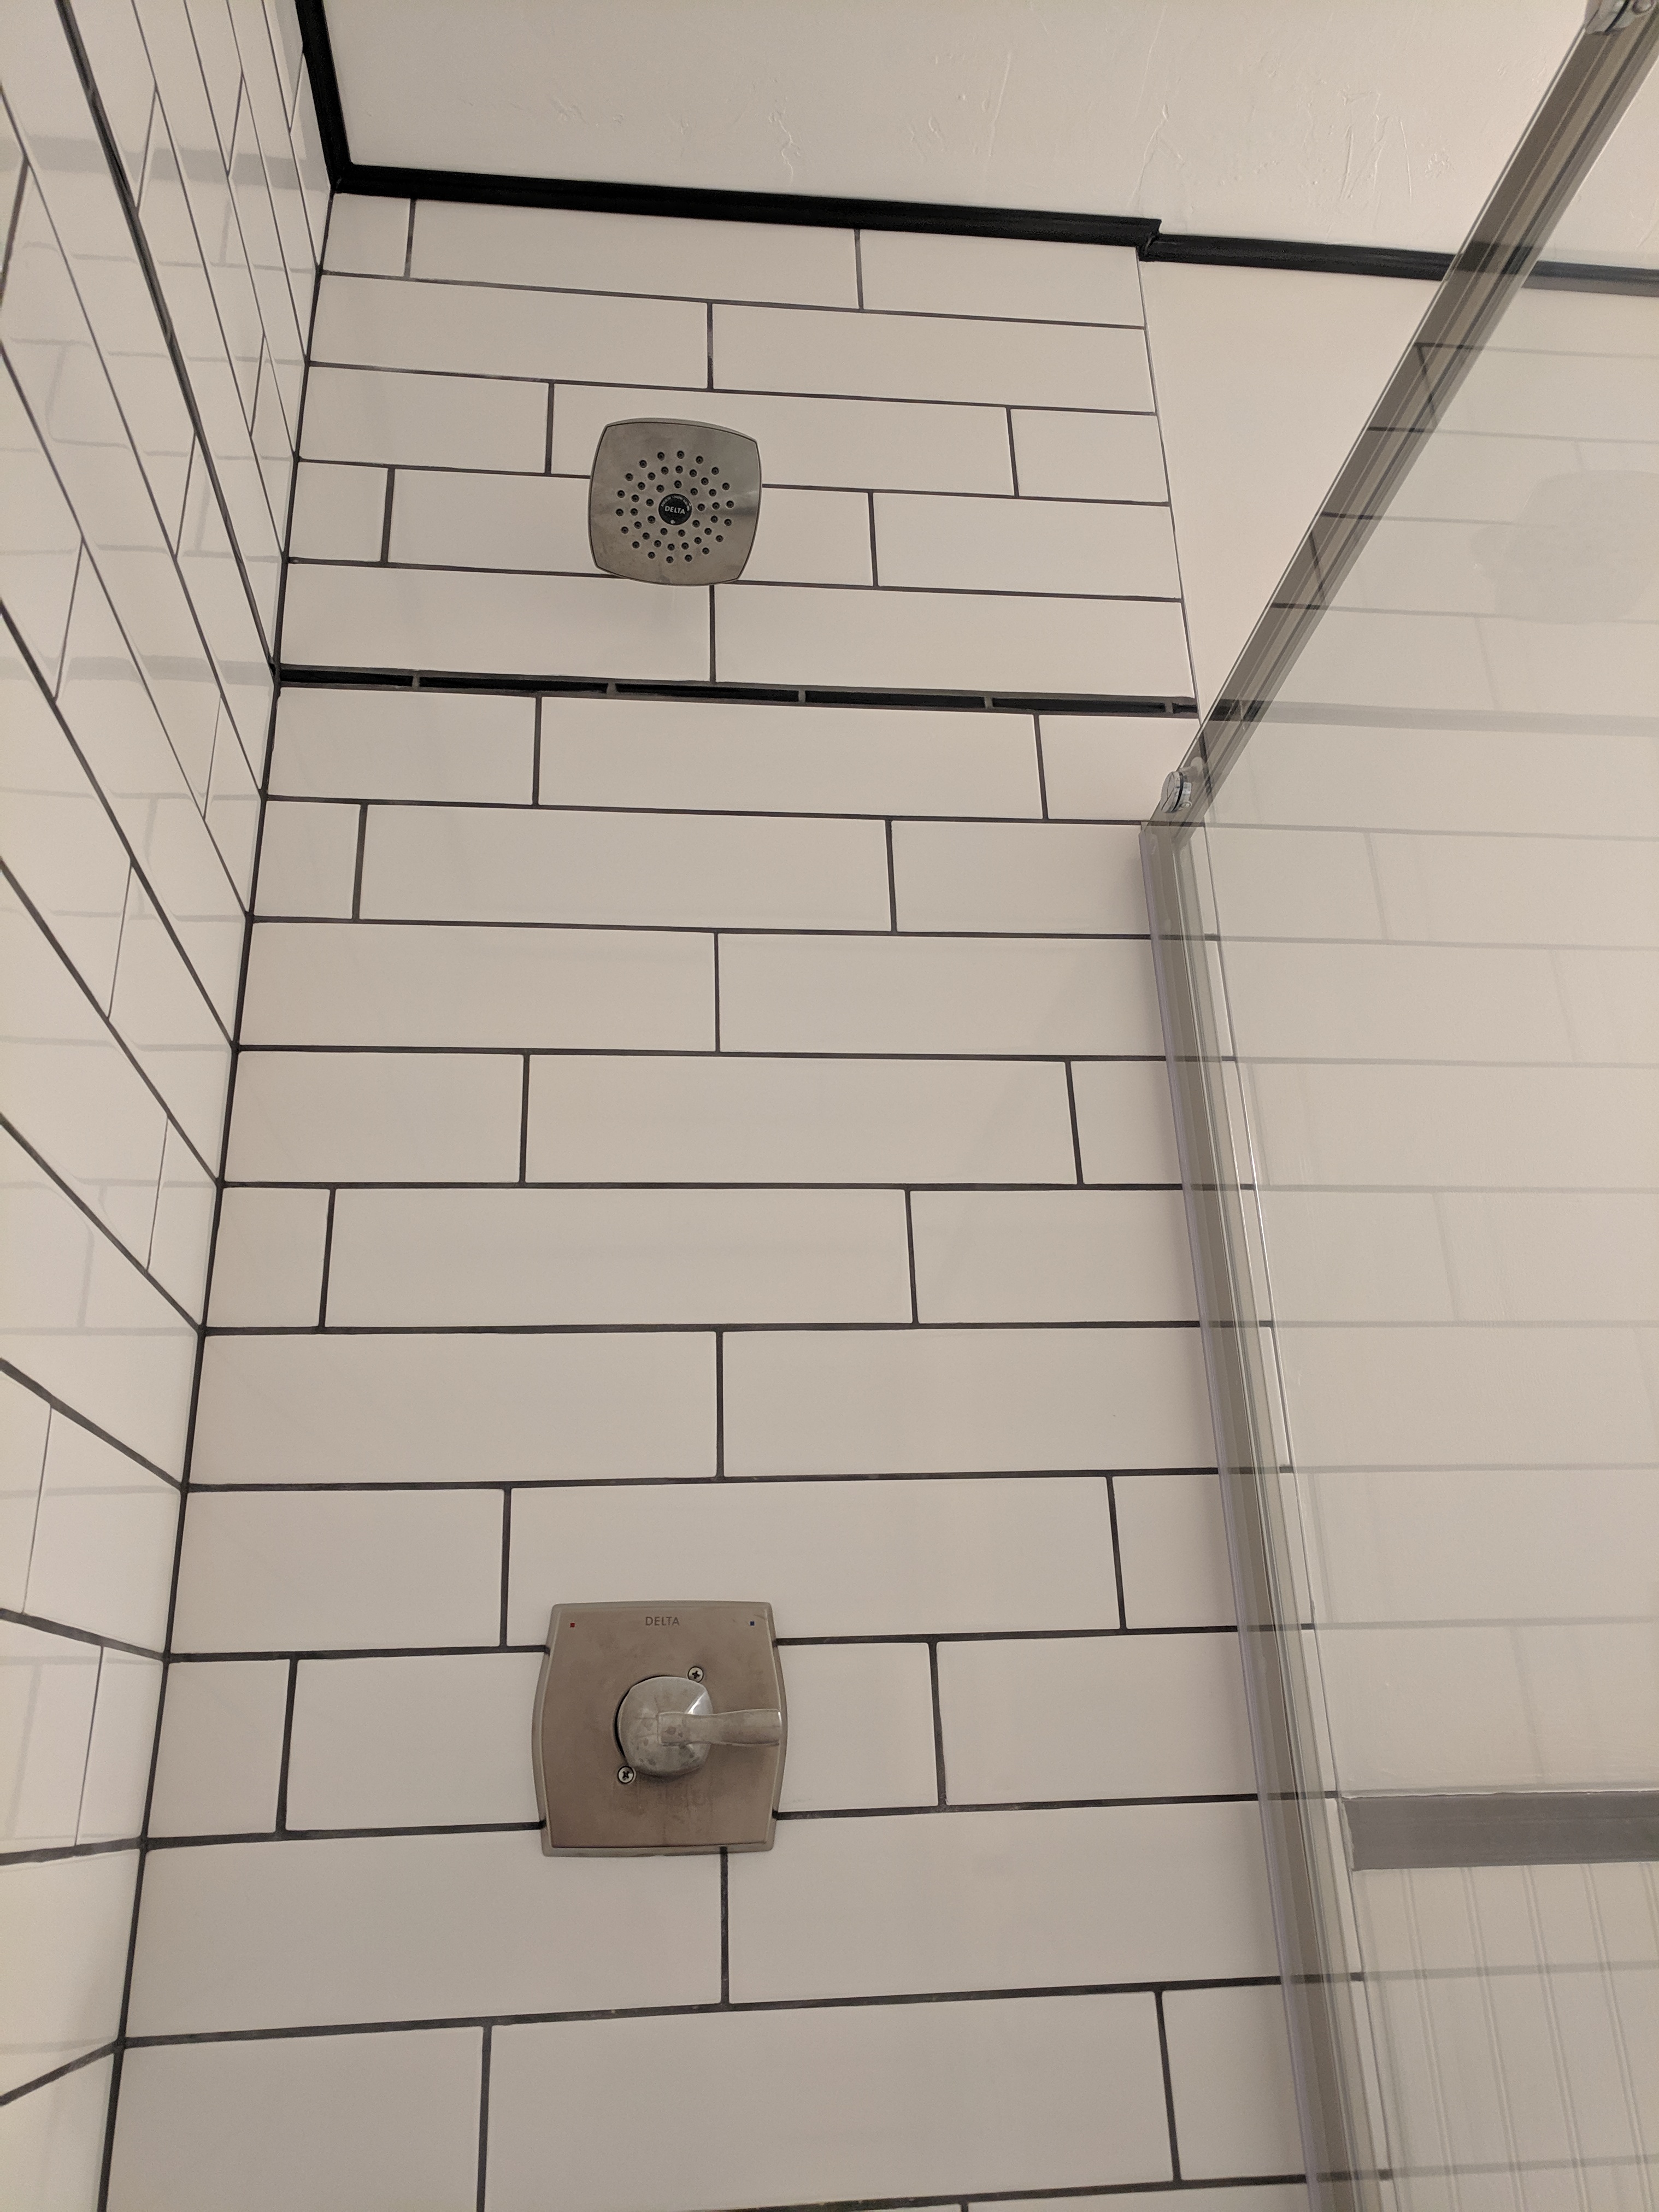 Downstairs Bathroom Shower